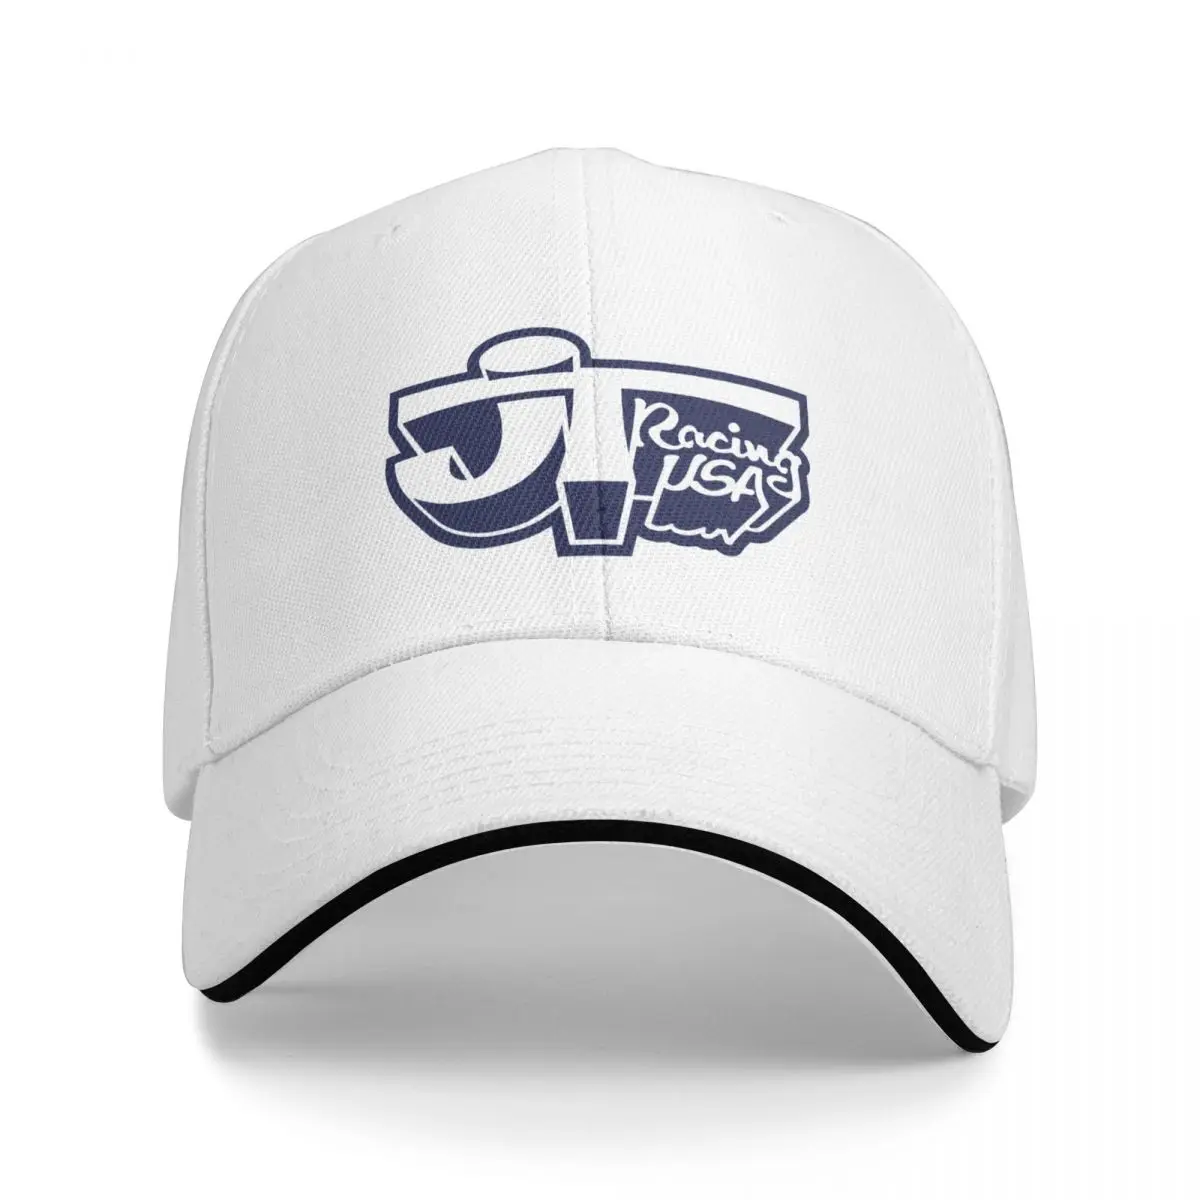 New JT Racing USA WHITE/BLUE- Old School BMX Baseball Cap Sunhat Hood Hat Hiking Hat Caps For Women Men'S